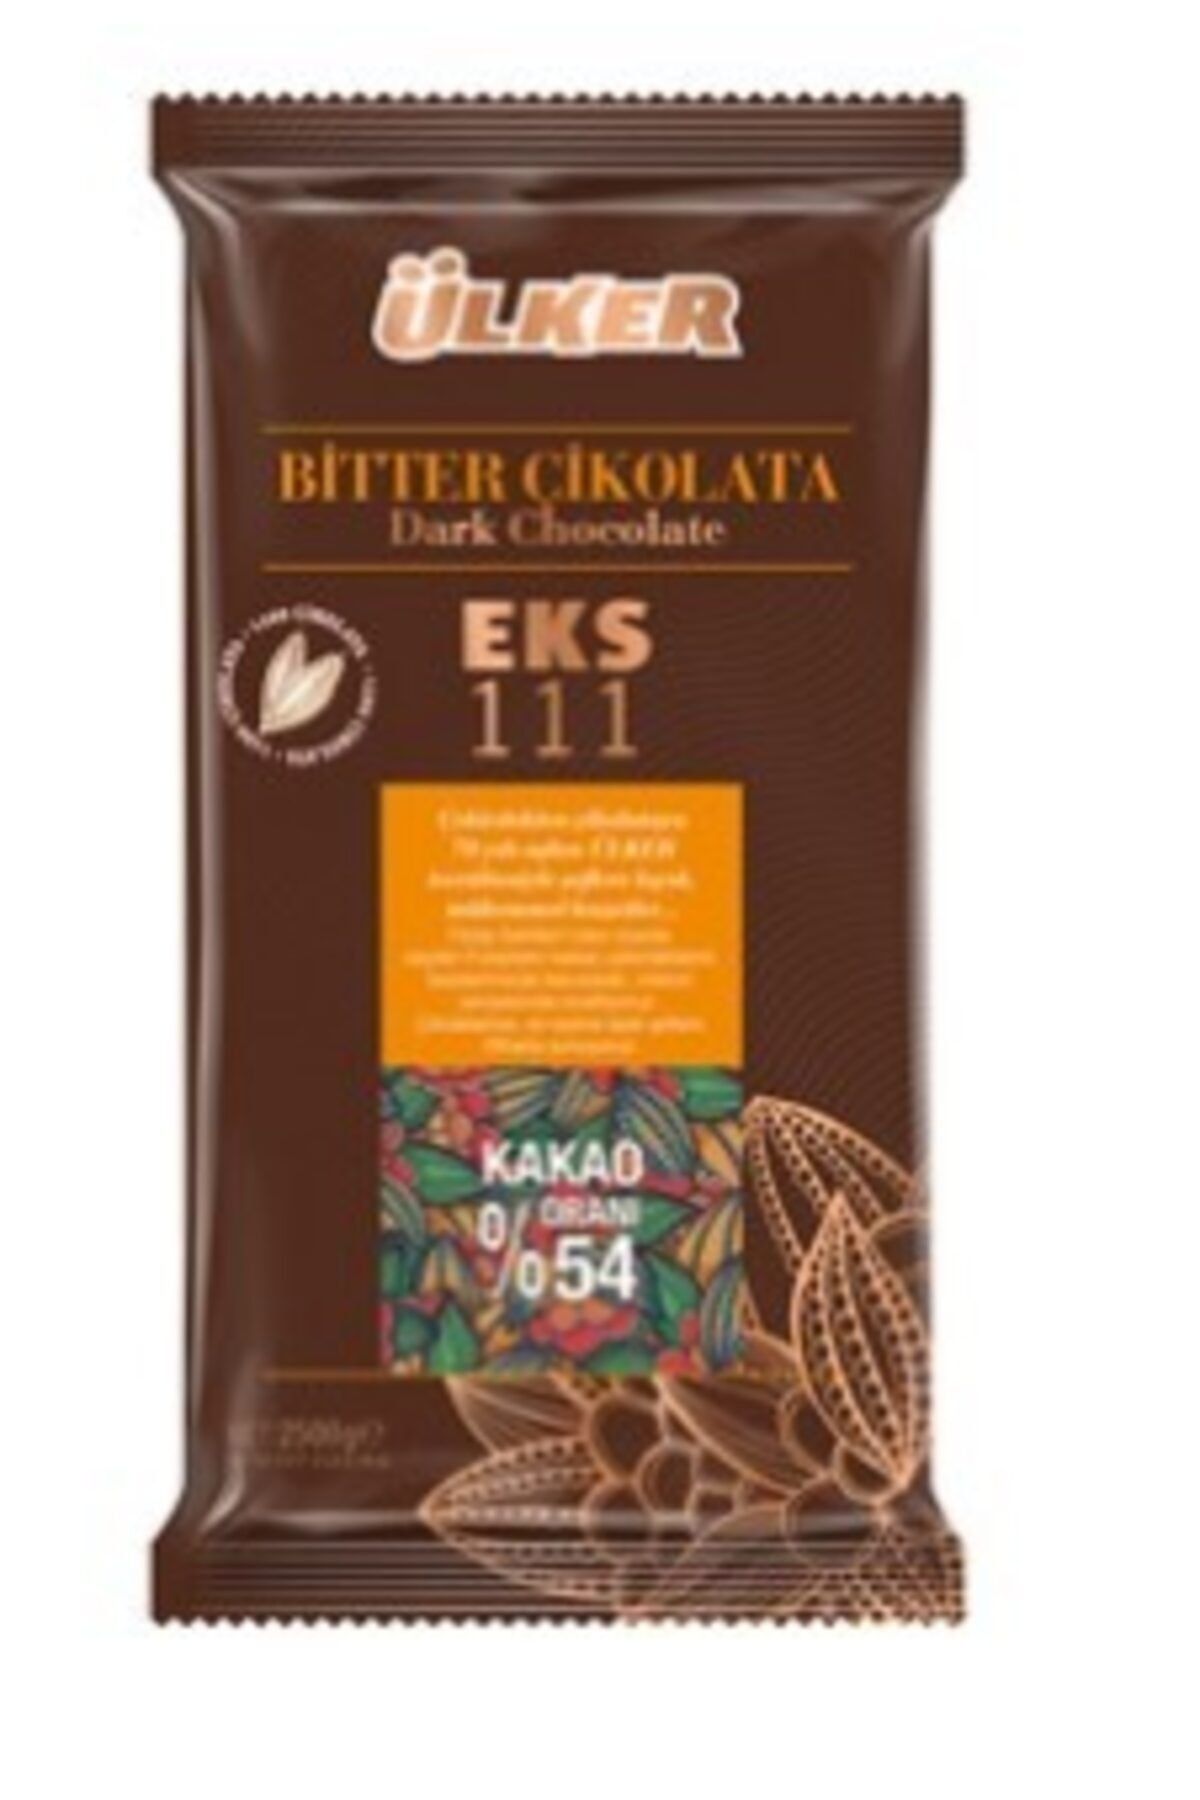 Ülker Bitter Kuvertür Çikolata Eks 111 %54 Kakao 2500g